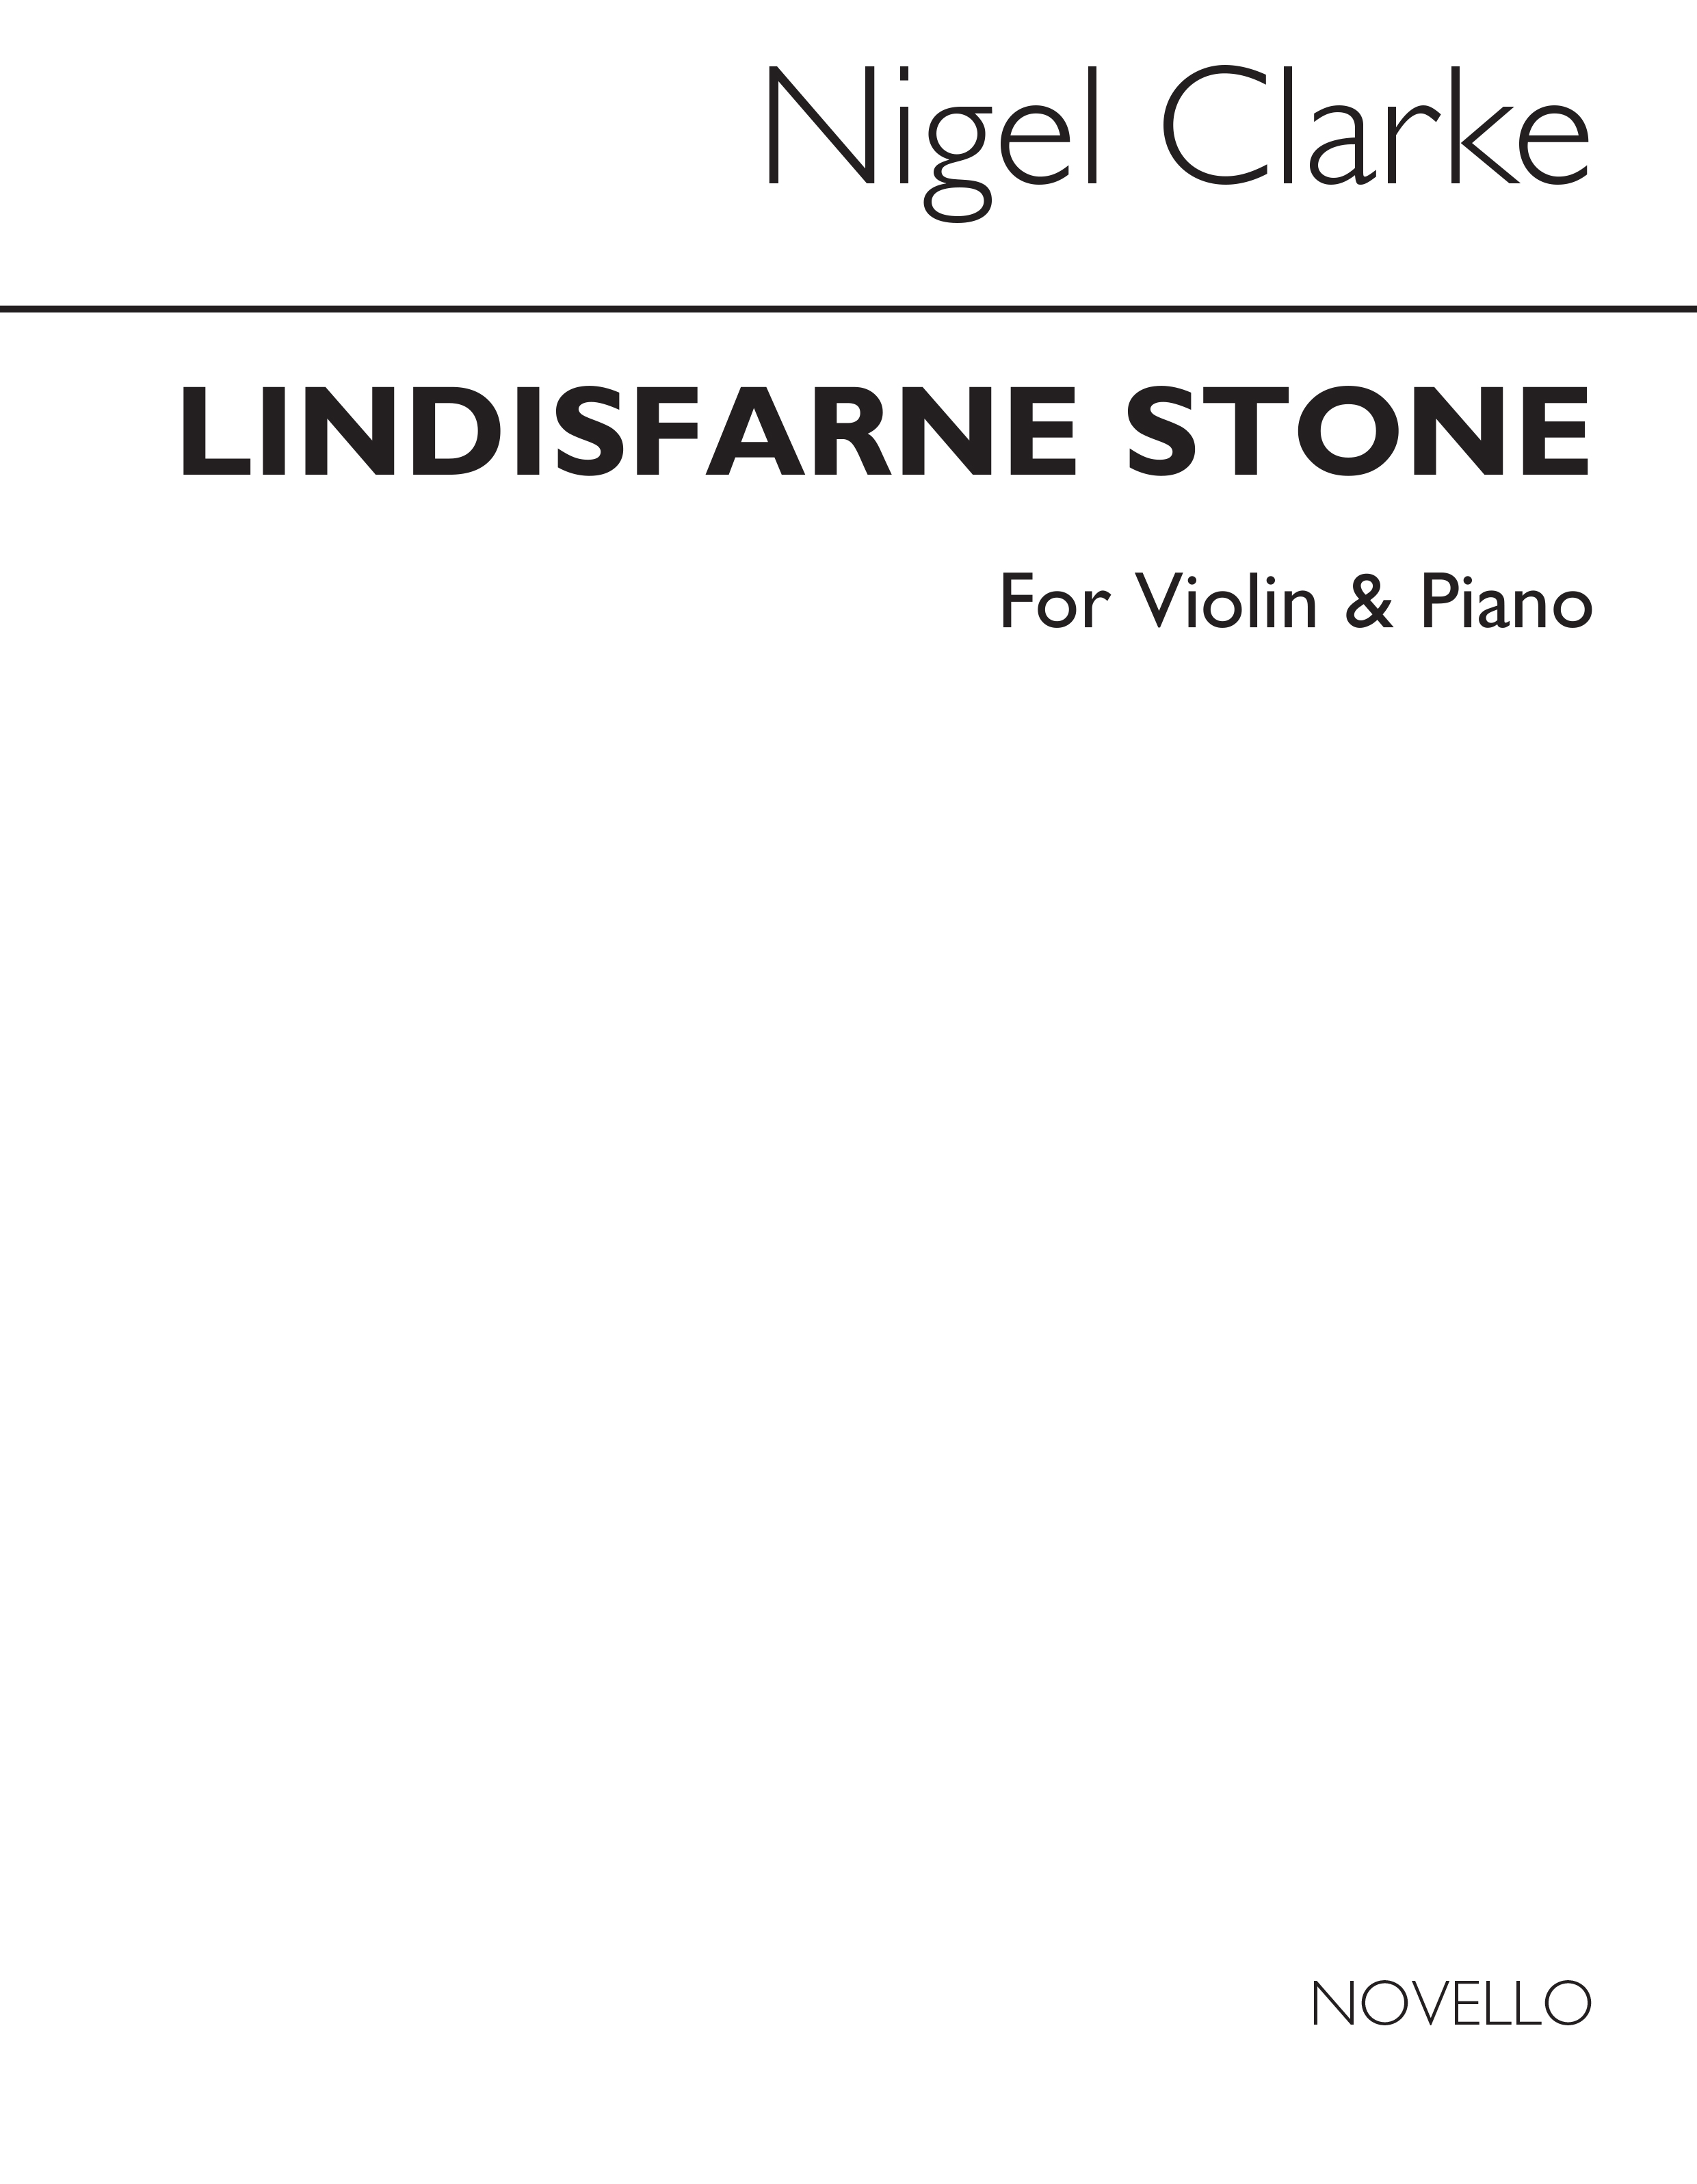 Clarke: Lindisfarne Stone for Violin and Piano